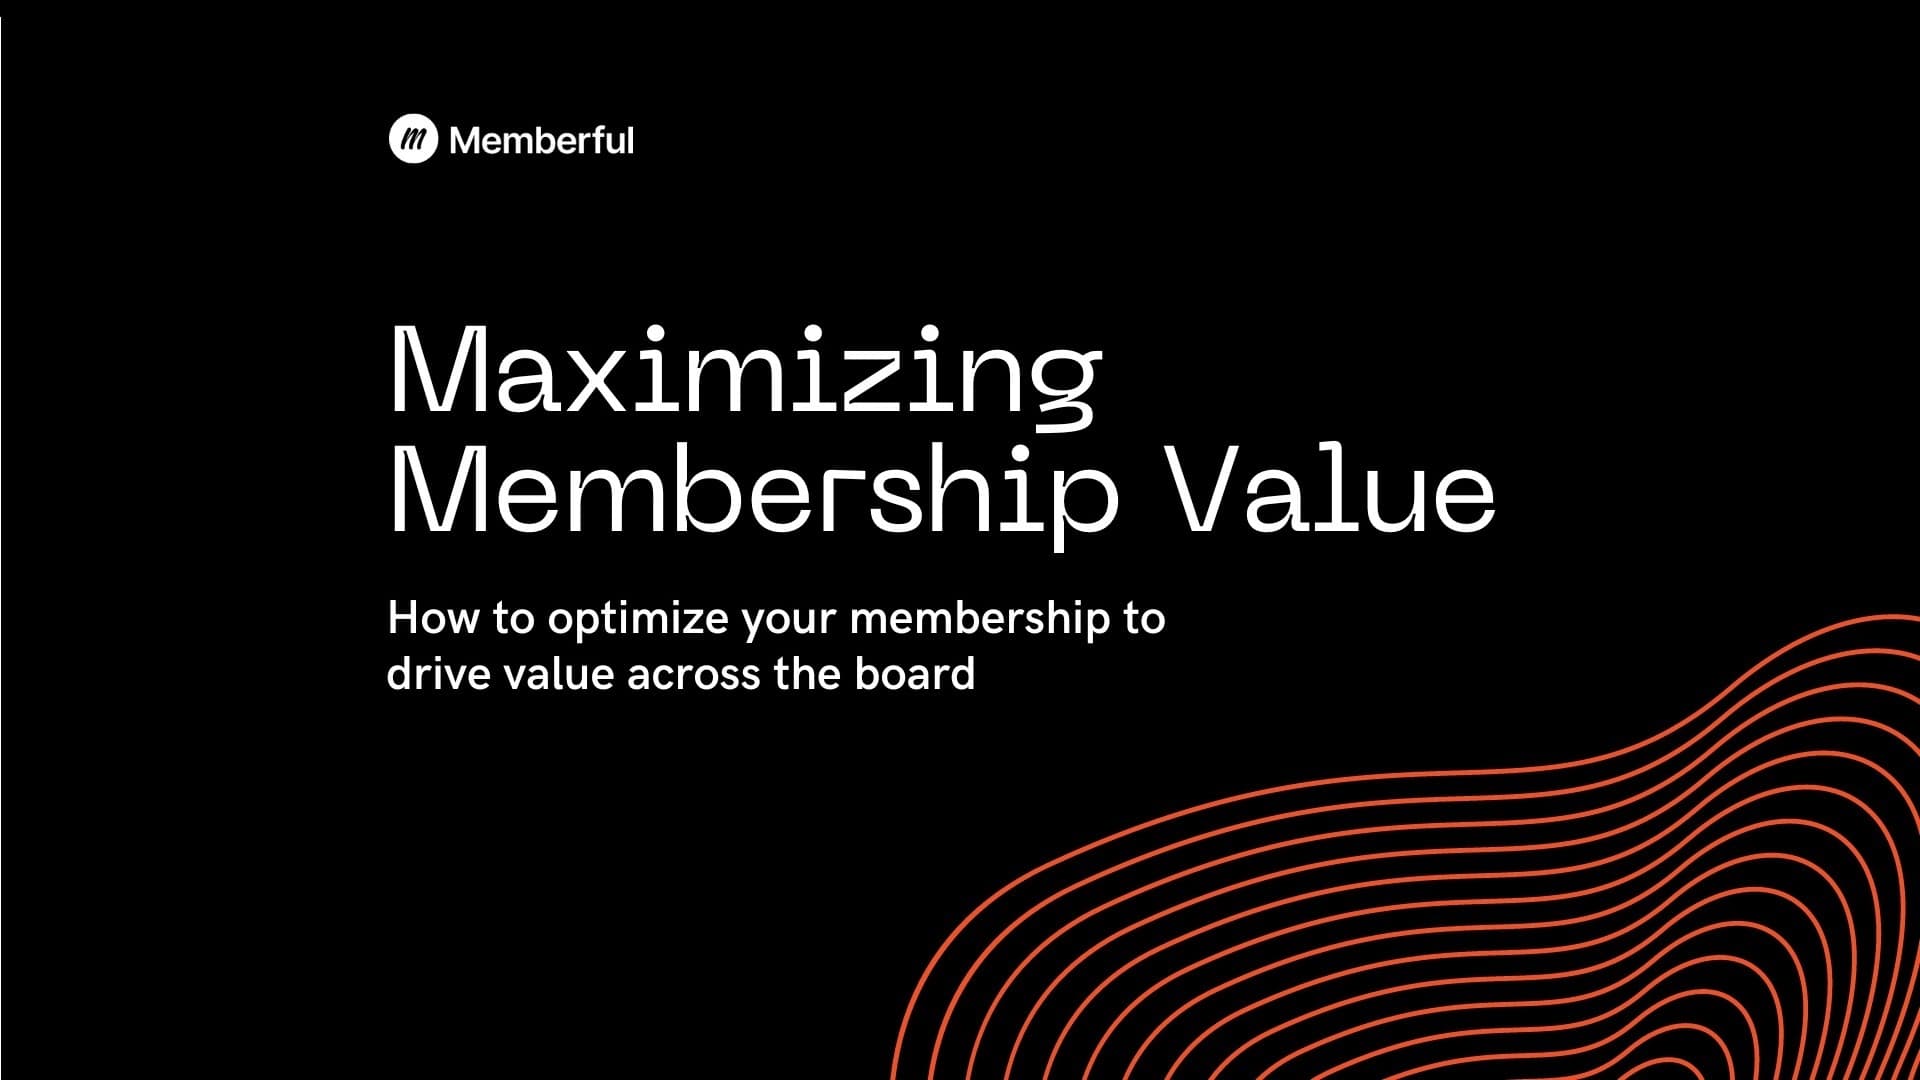 Optimize your membership to maximize lifetime value (LTV)